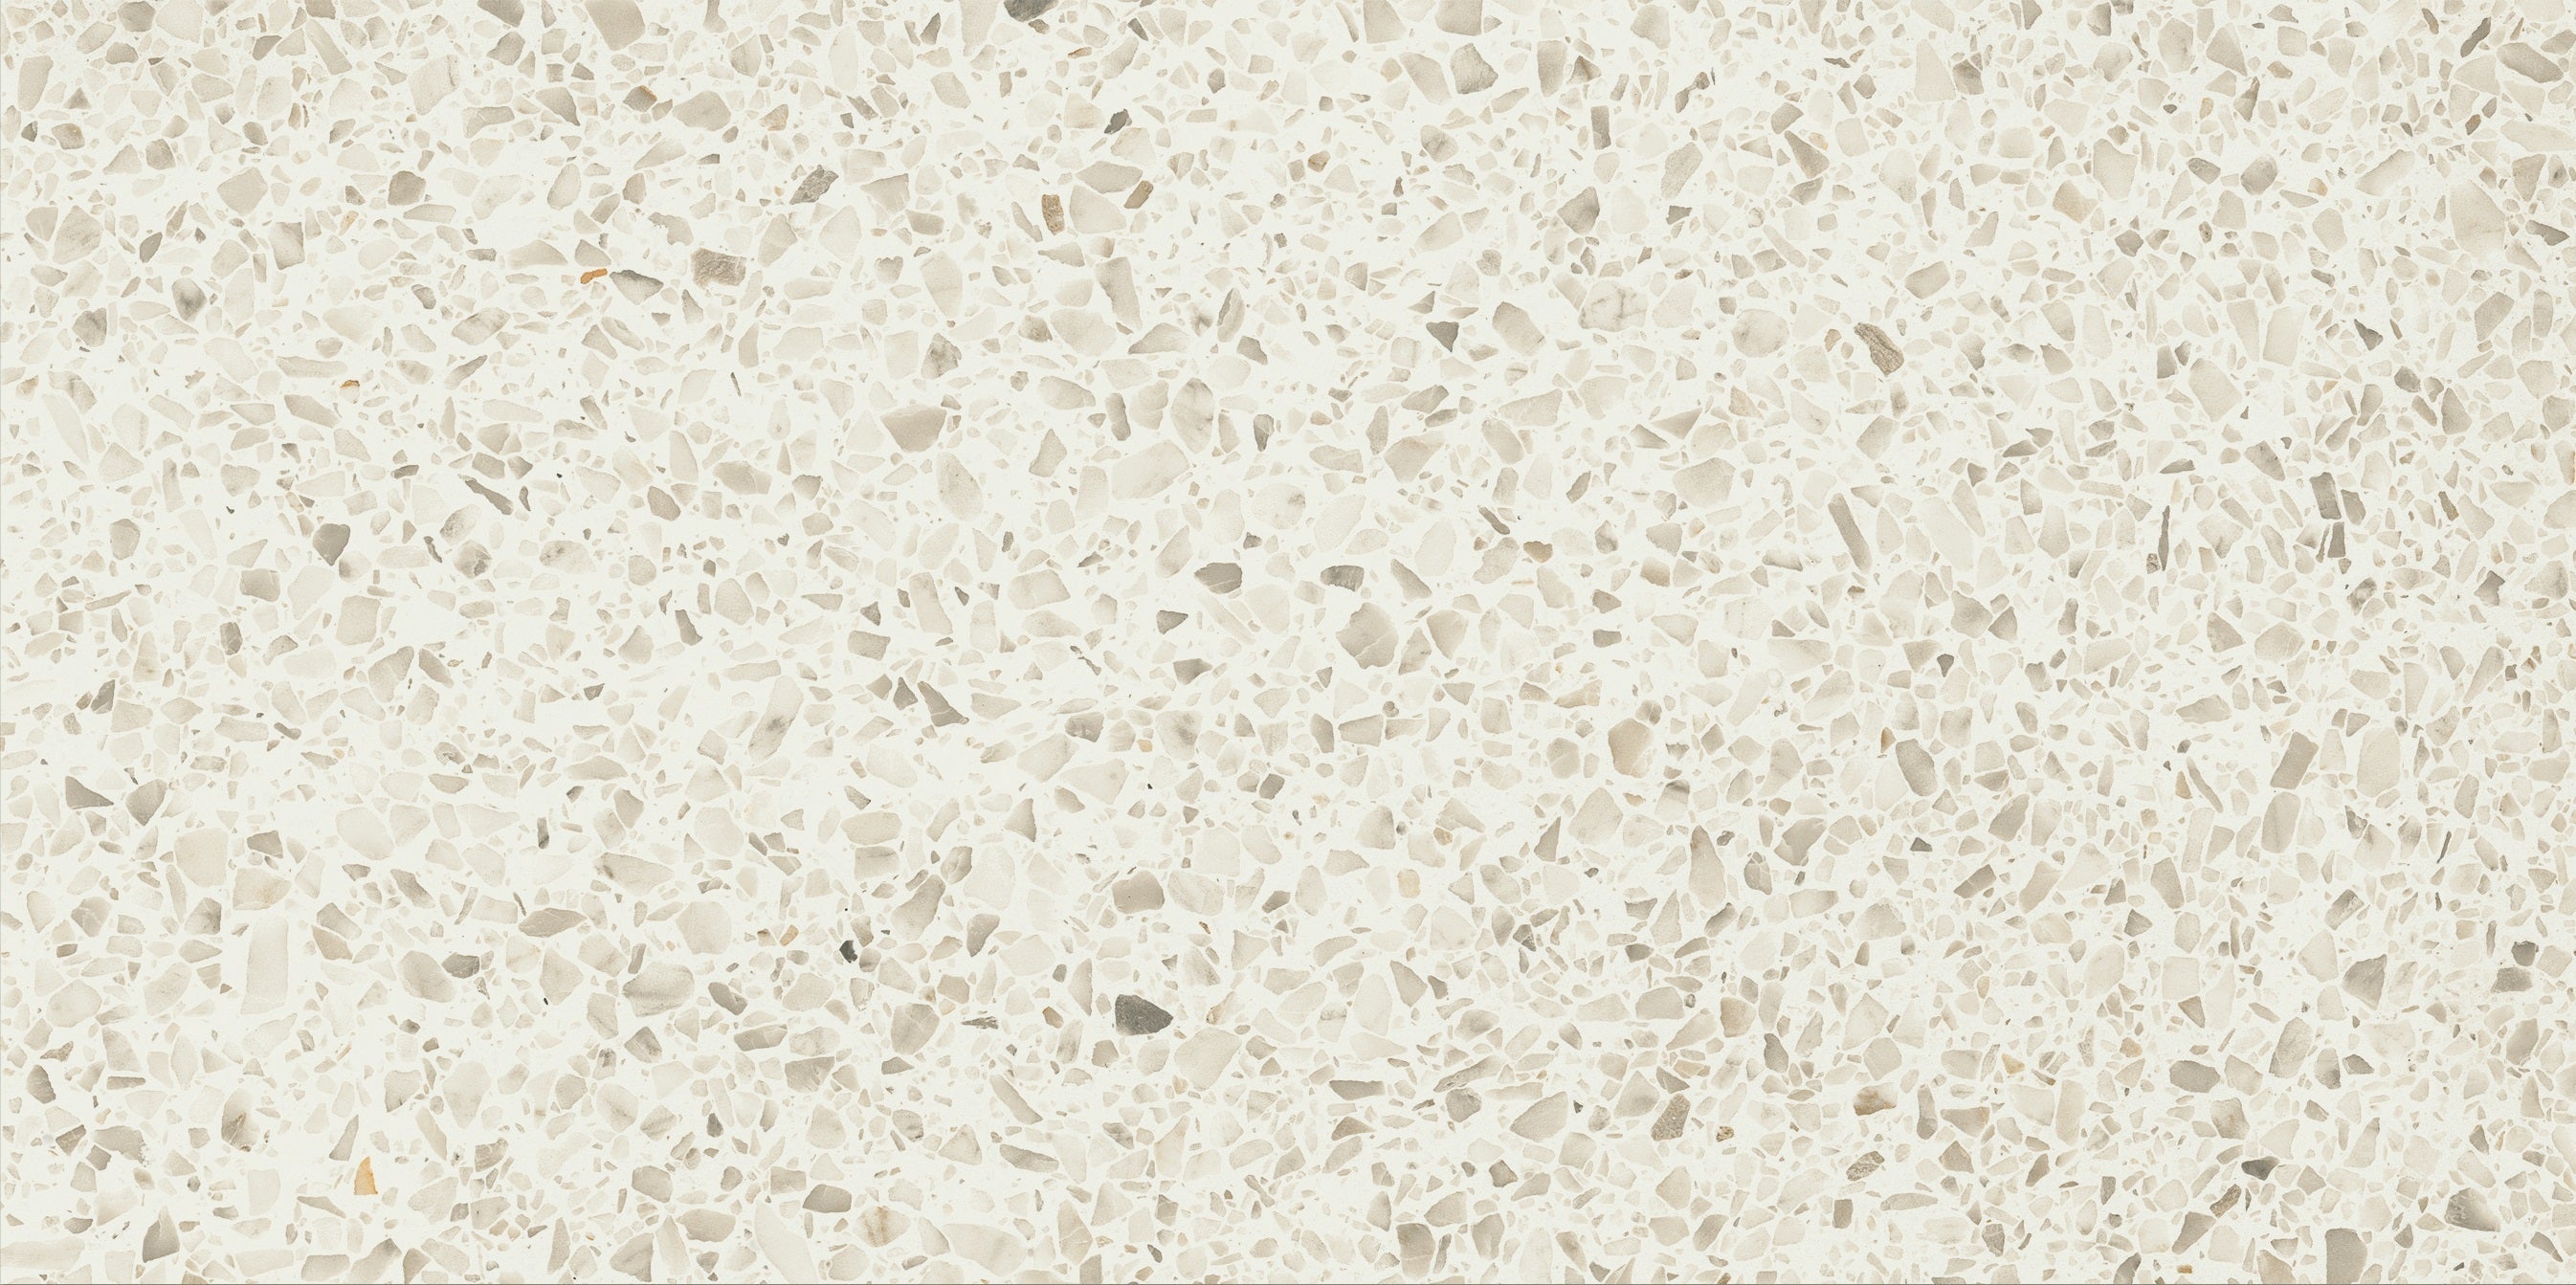 landmark 9mm elite oyster beige field tile 12x24x9mm matte rectified porcelain tile distributed by surface group international